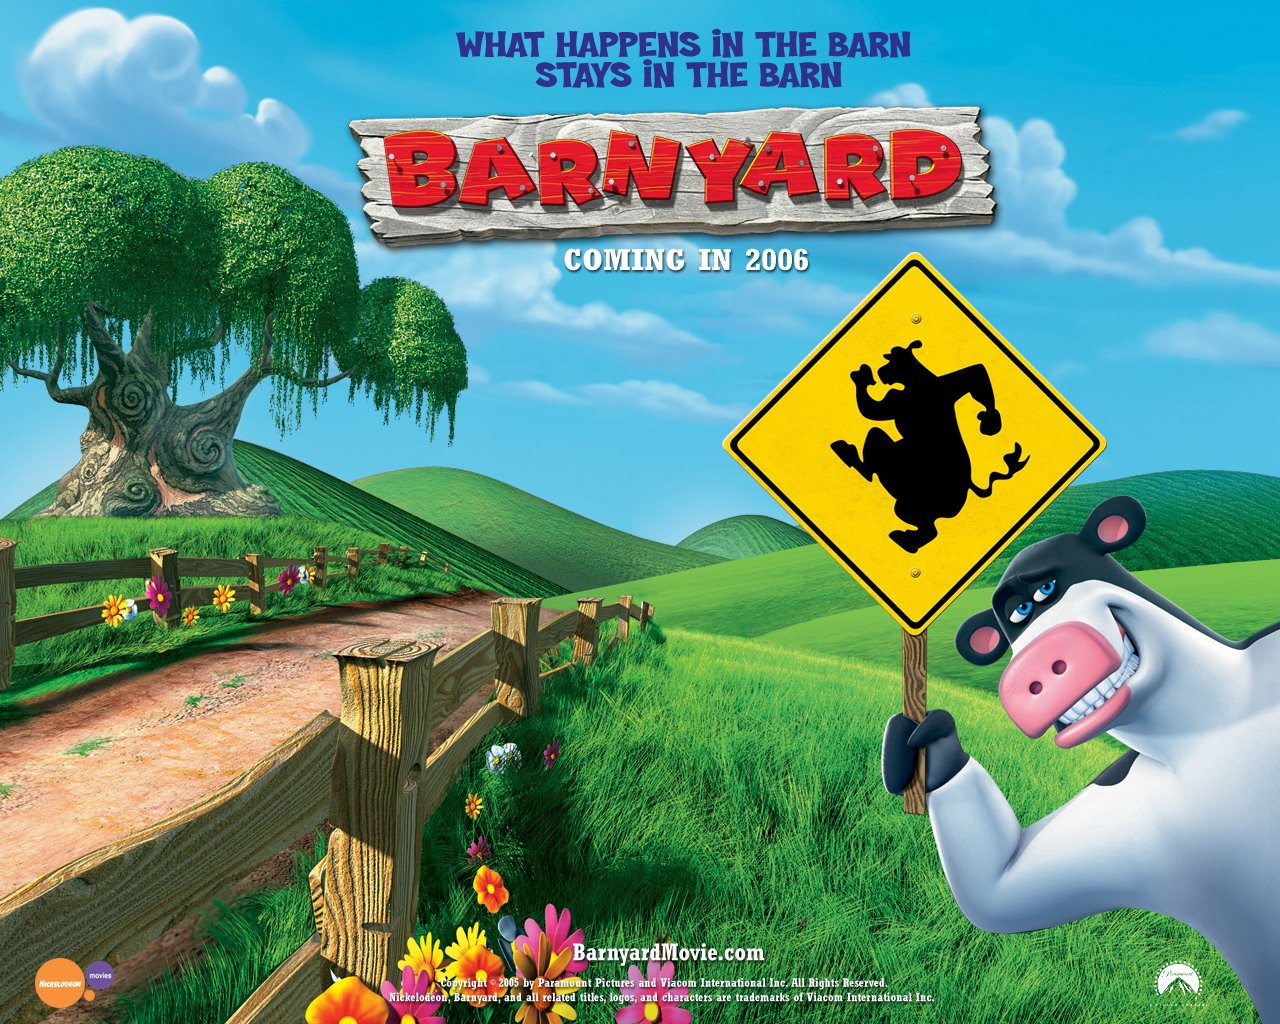 Barnyard The Original Party Animals Wallpaper